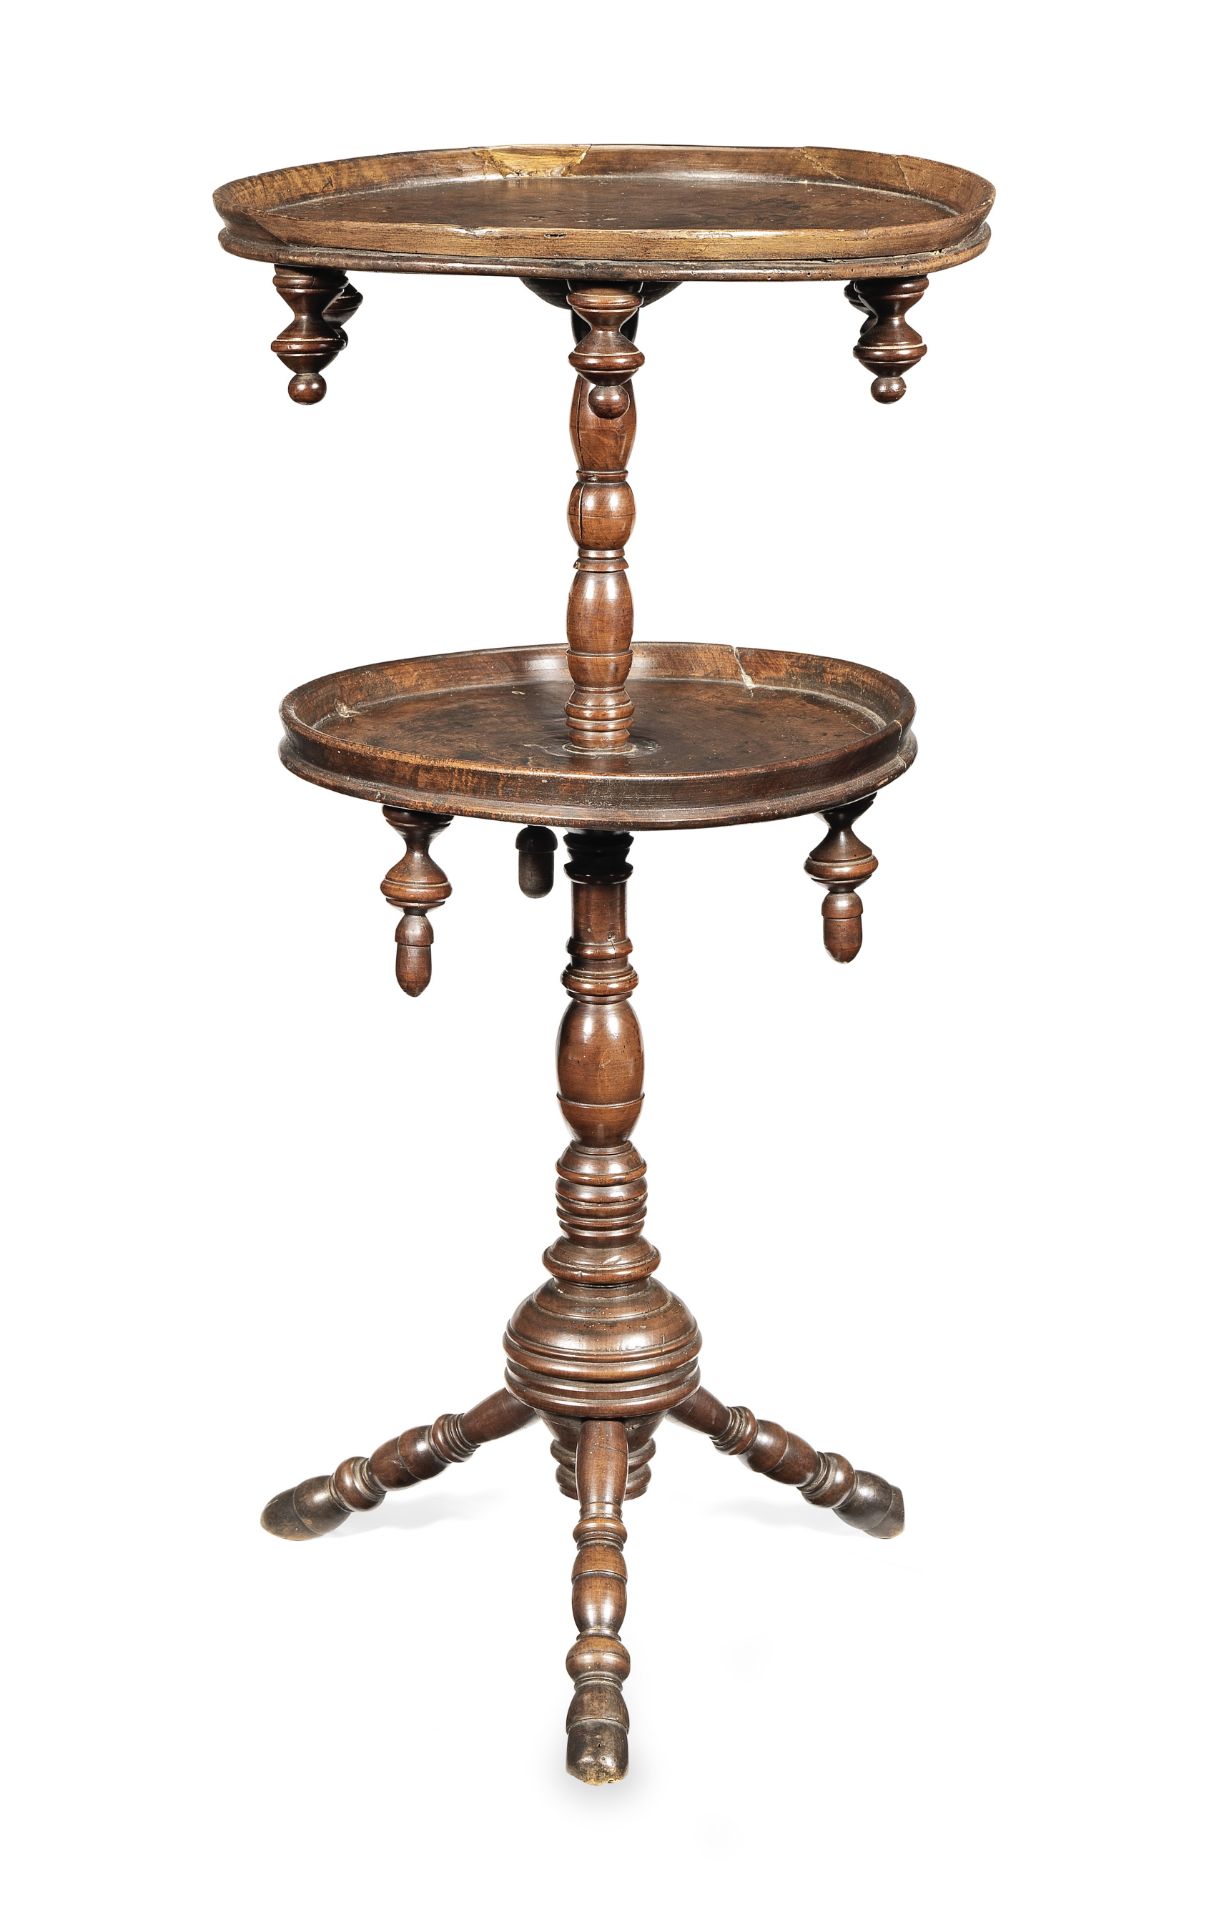 A George III fruitwood turner's two-tier tripod table, circa 1800